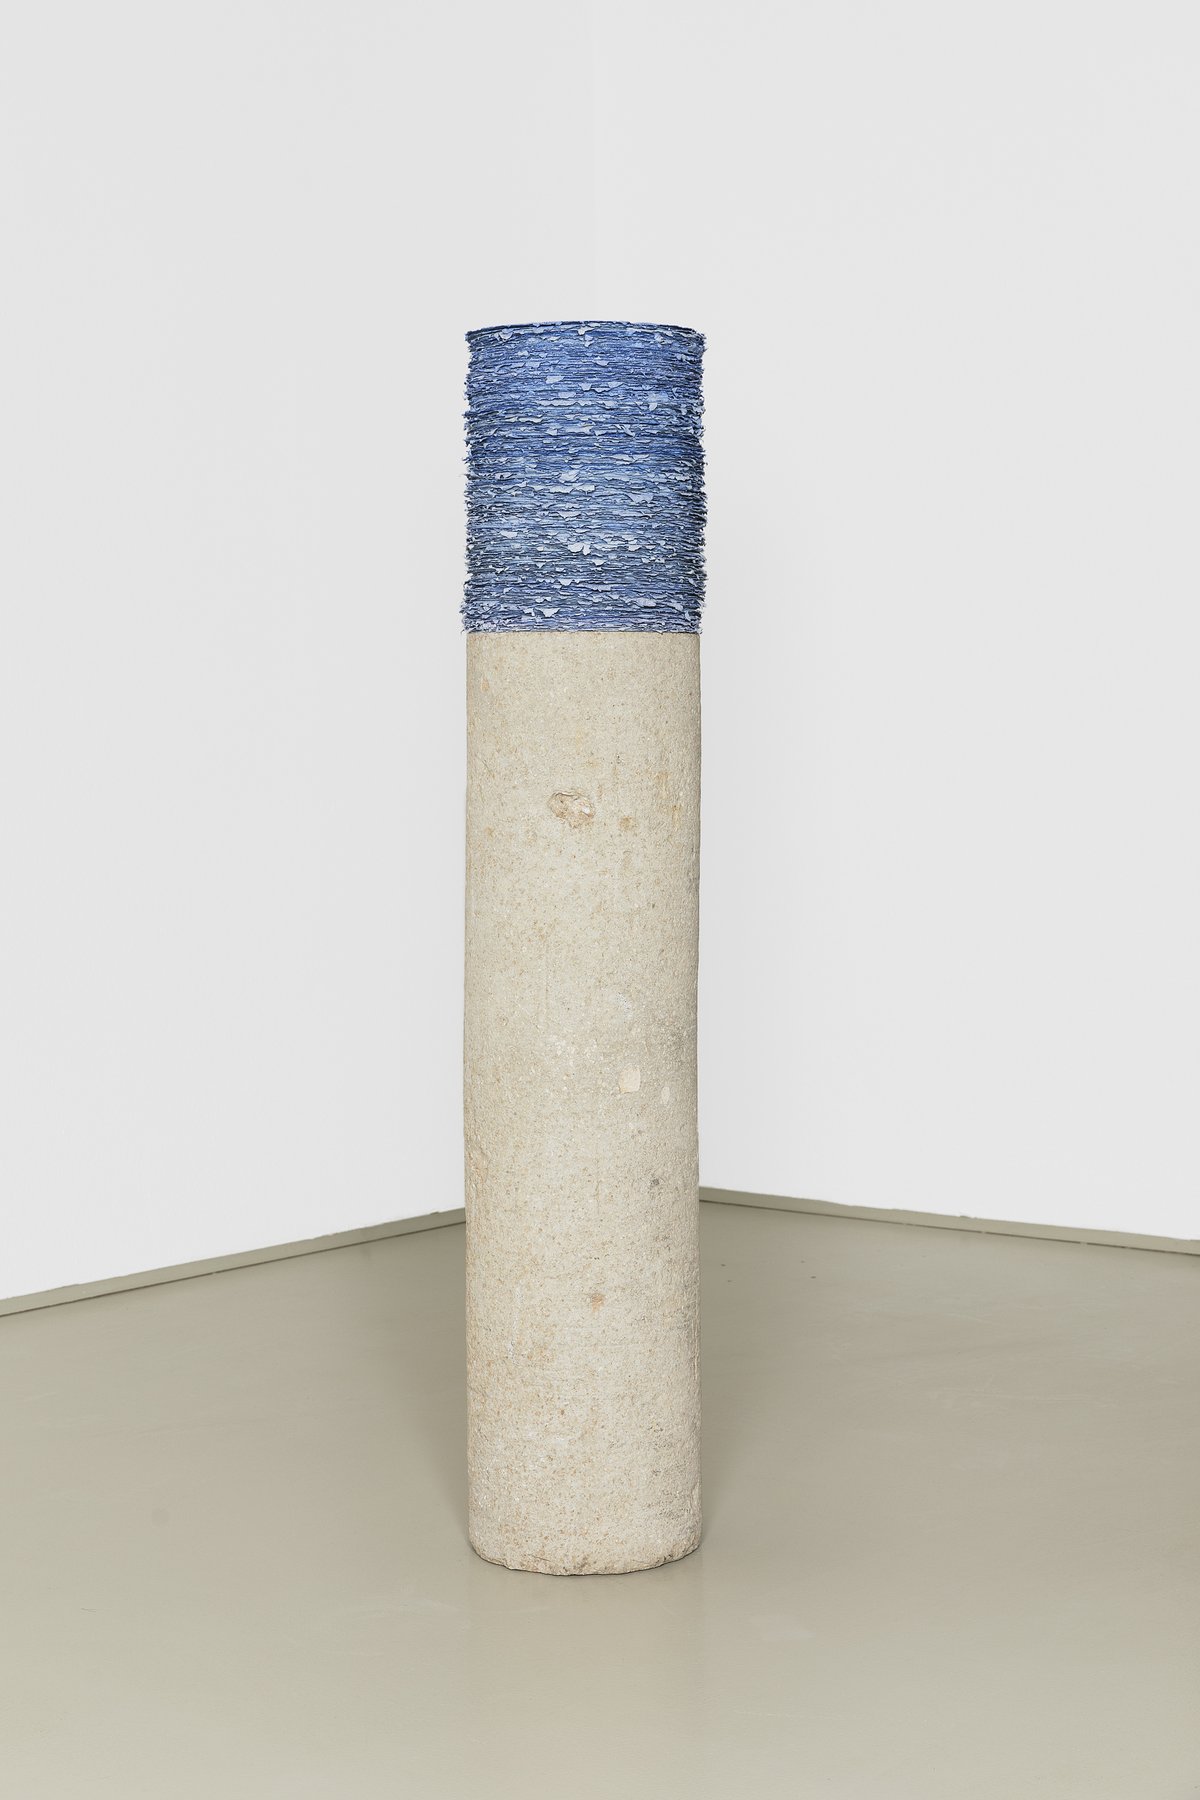 helmut dirnaichner, &quot;sedimente lapislazuli&quot; (1996), lapis lazuli, cellulose, limestone, h: 134 cm, diameter: 27 cm